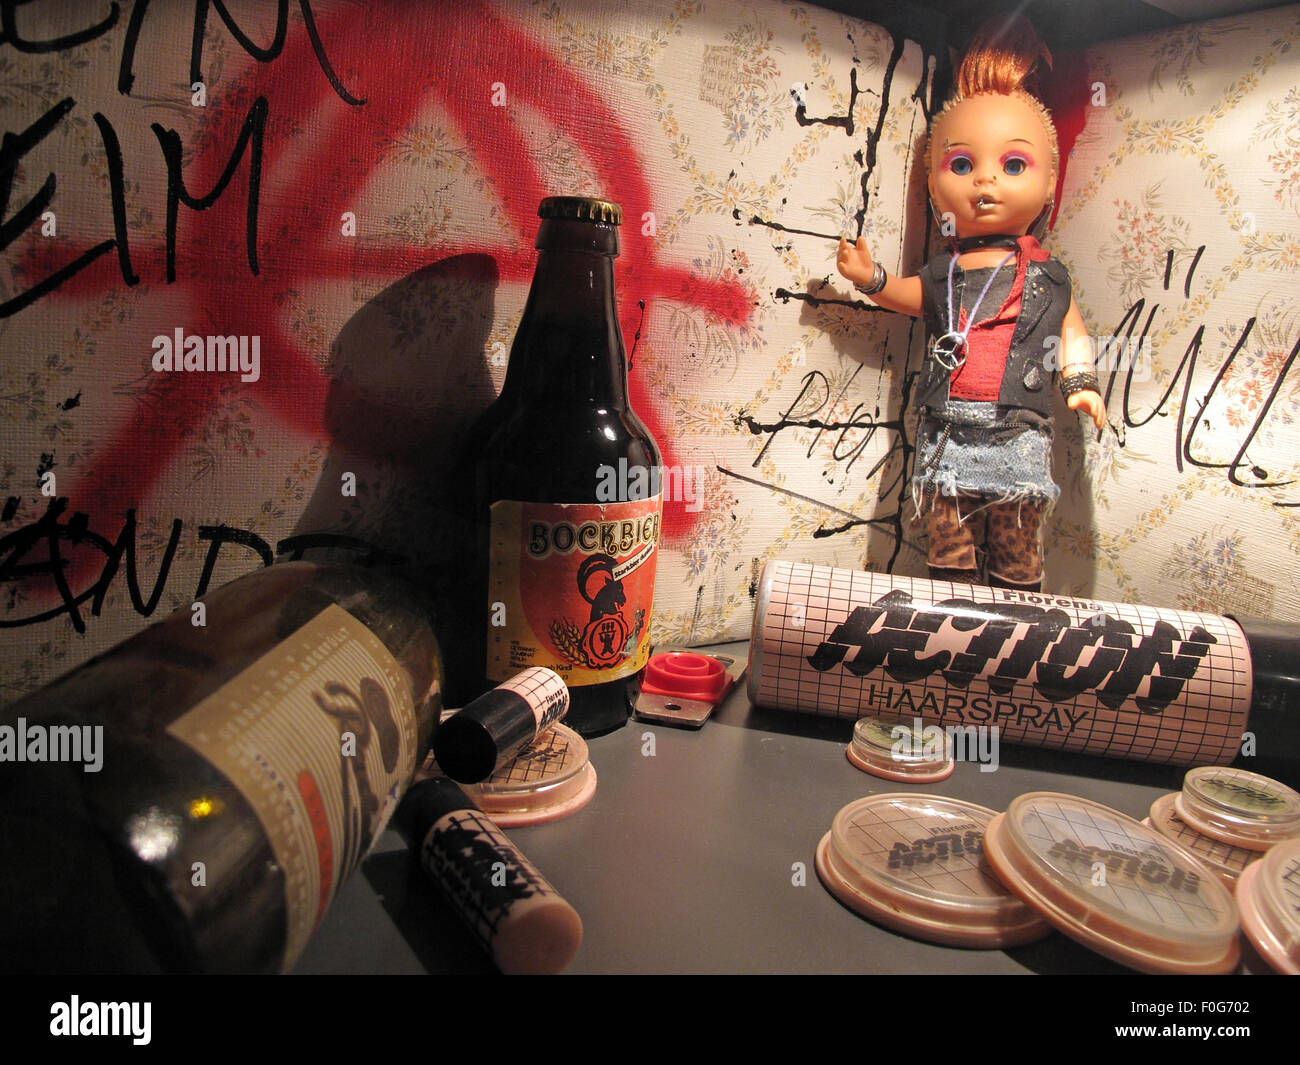 Berlin beer graffiti doll Action, DDR hairspray ,and make-up,Germany Stock Photo